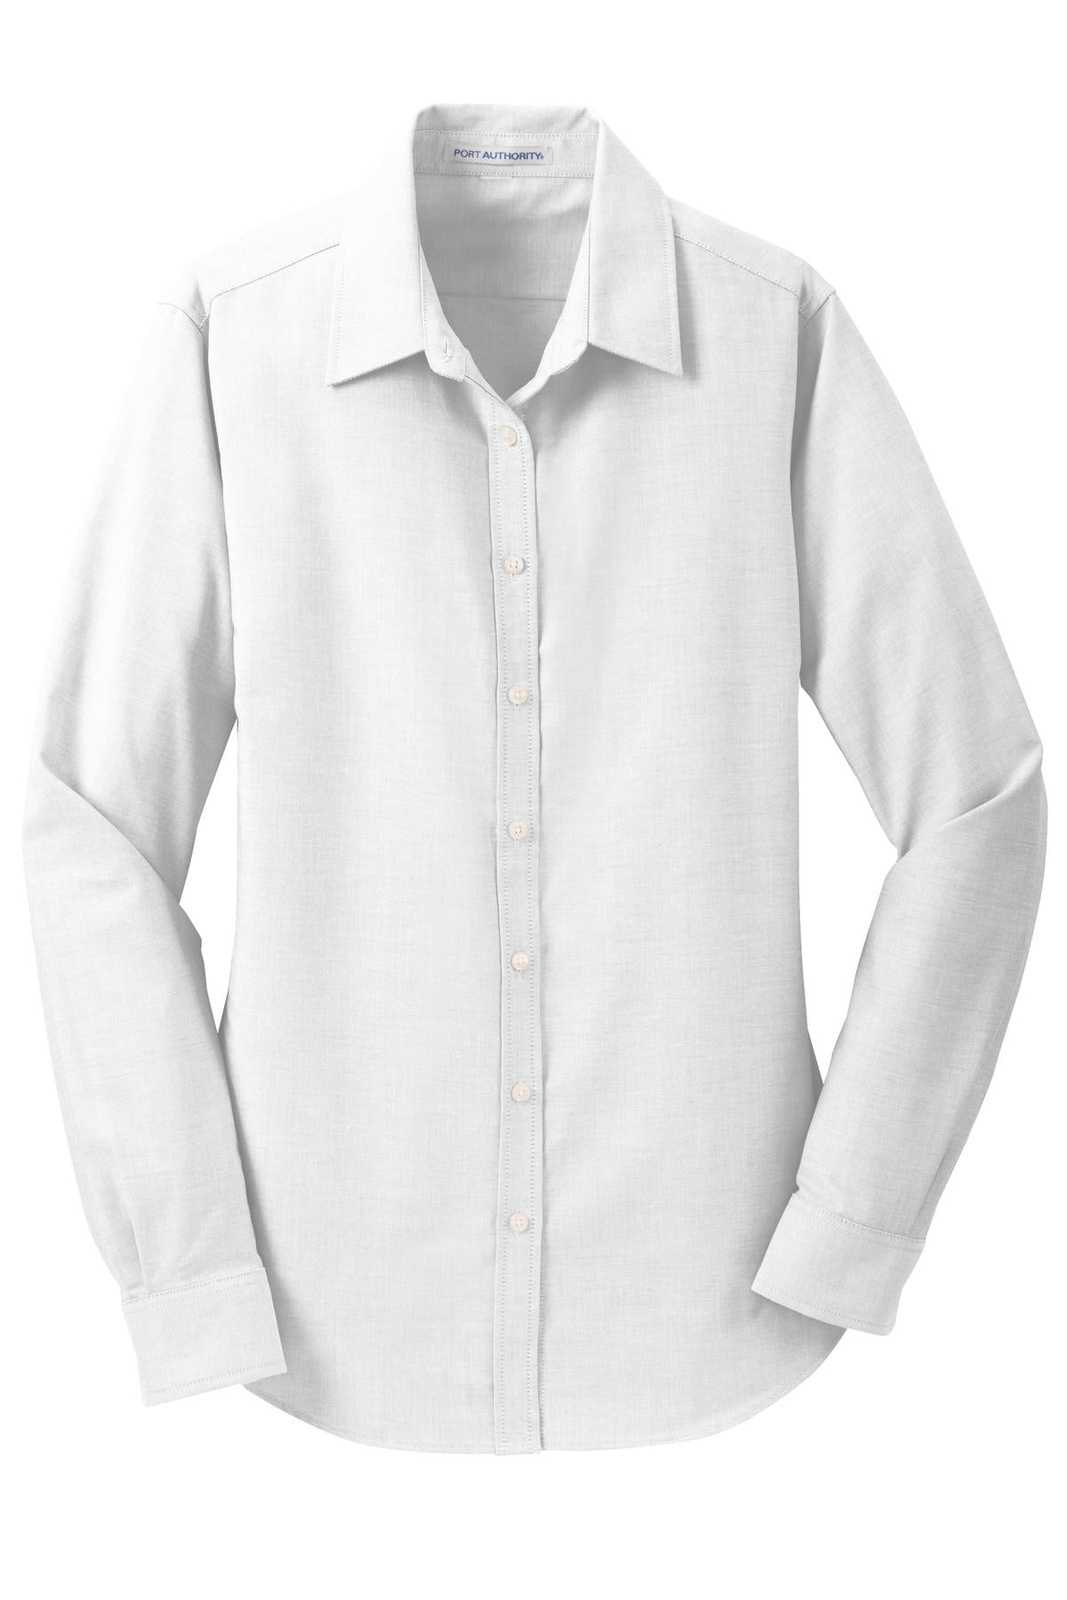 Port Authority L658 Ladies Superpro Oxford Shirt - White - HIT a Double - 5